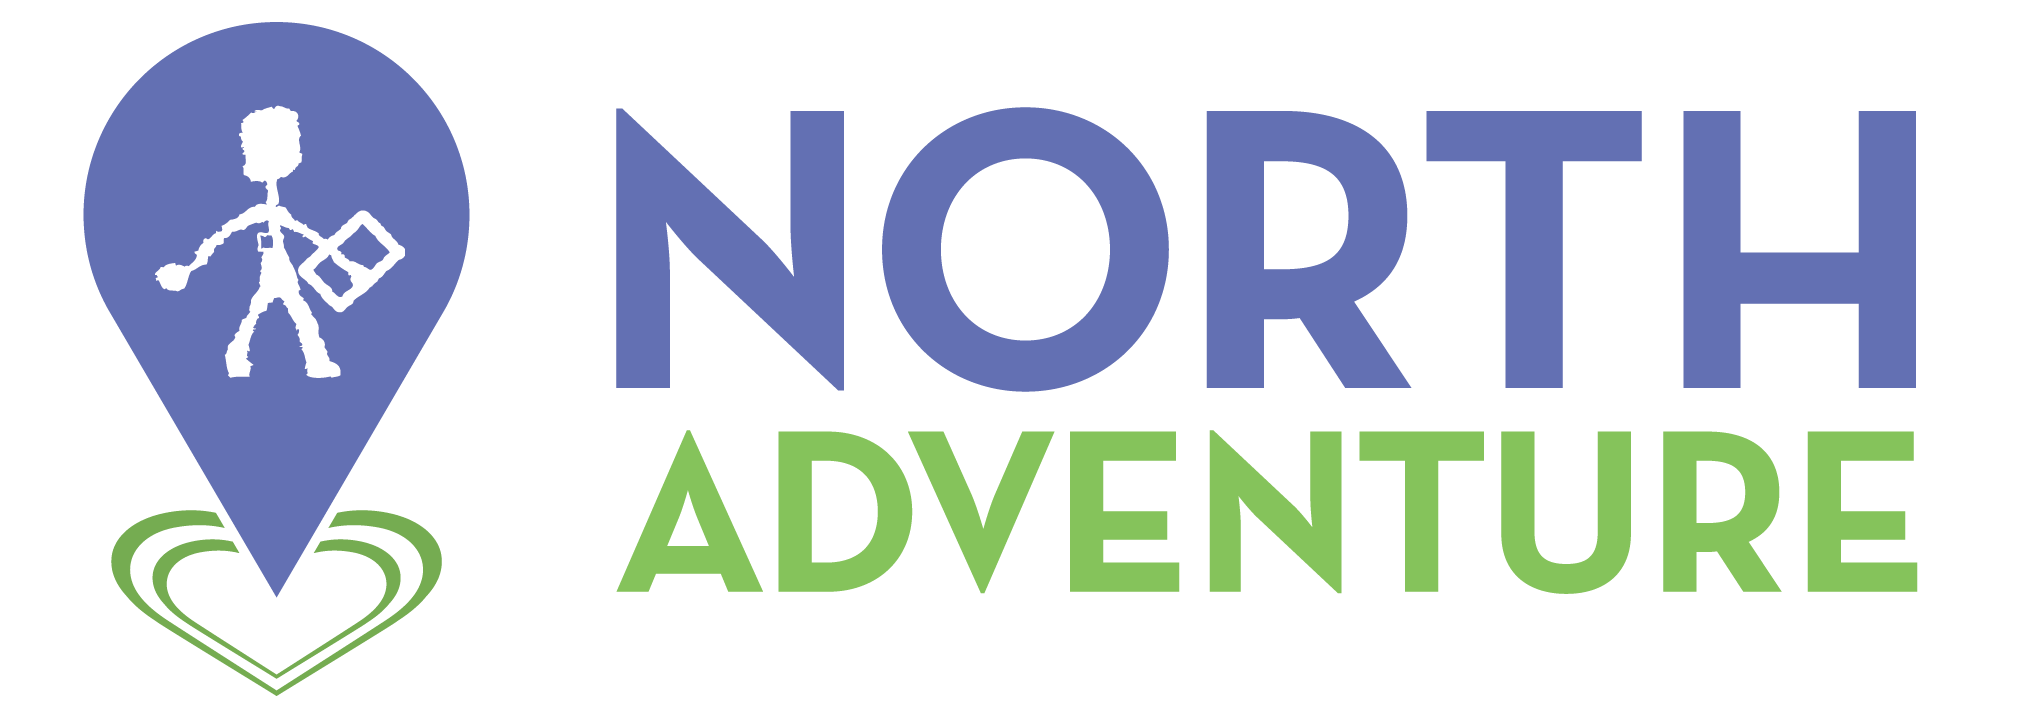 North Adventure logo.png